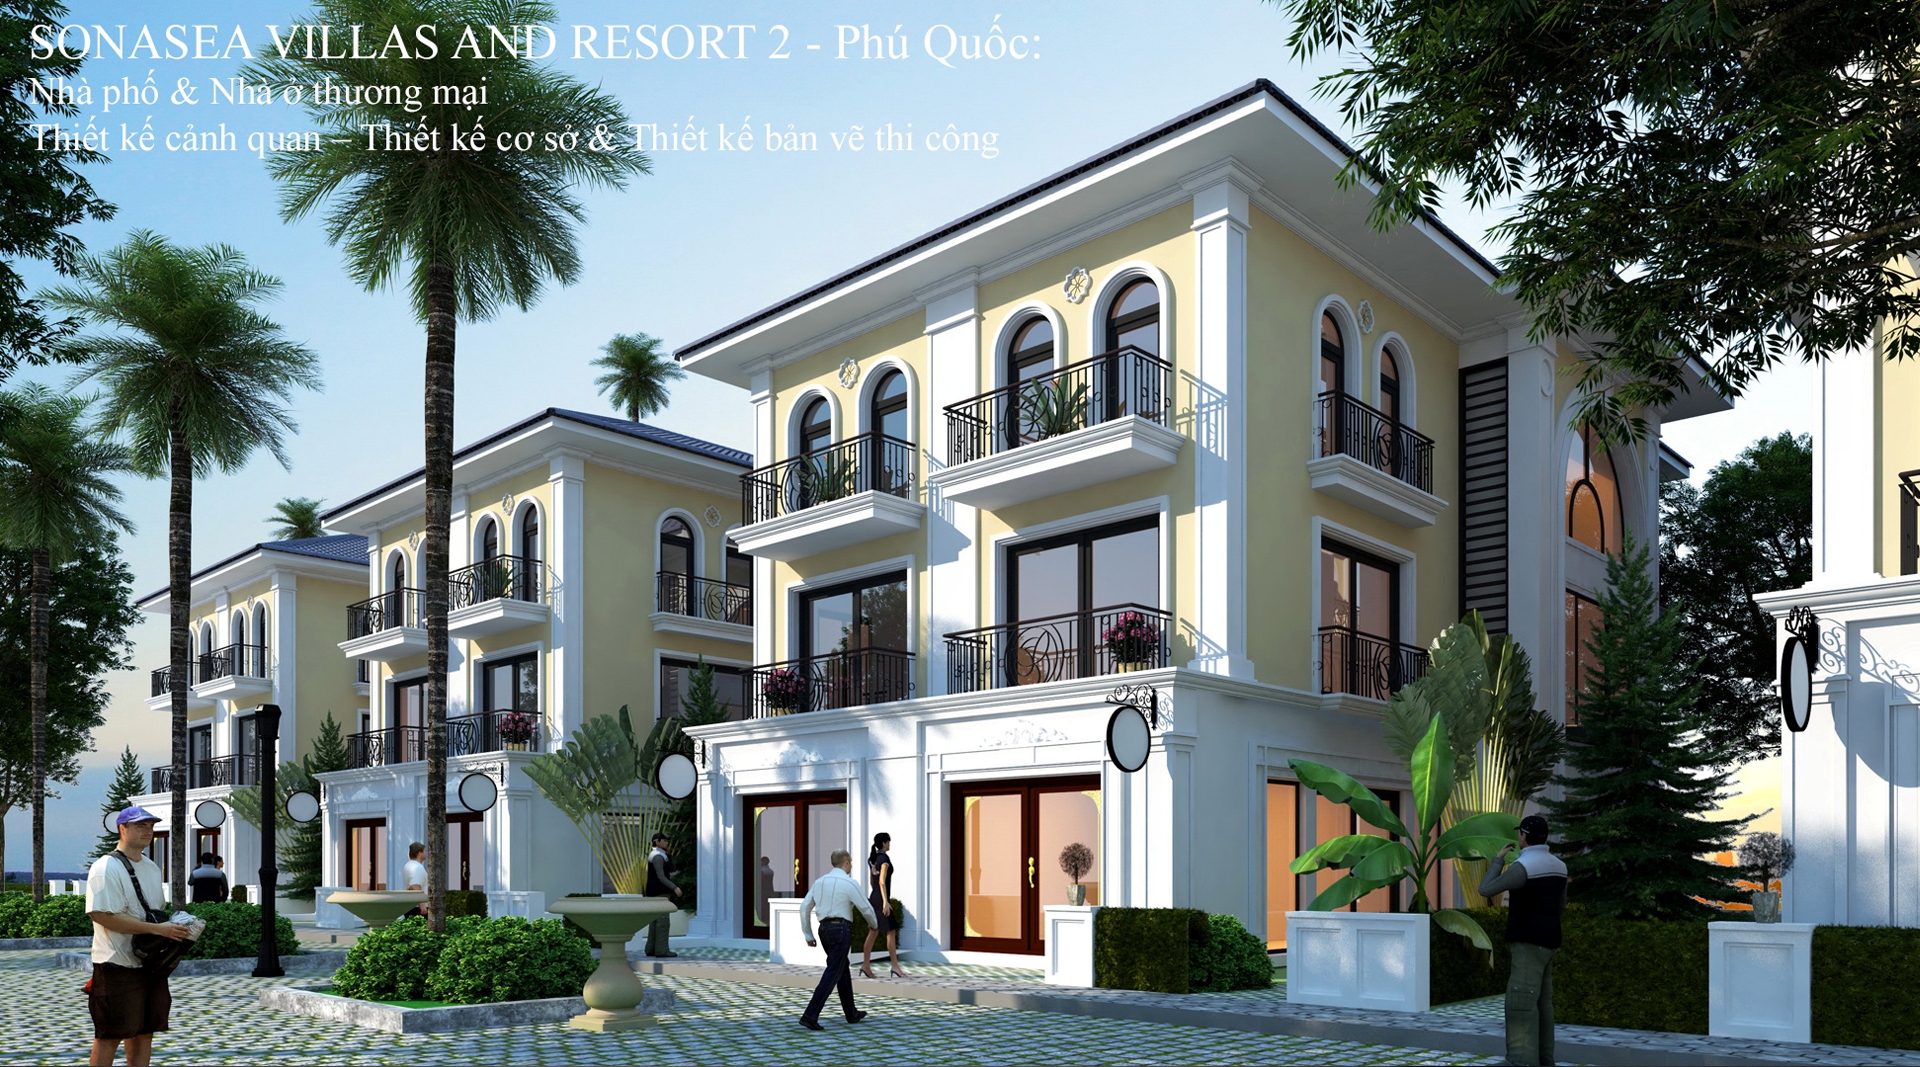 Sonasea Villas & Resort 2, Phu Quoc